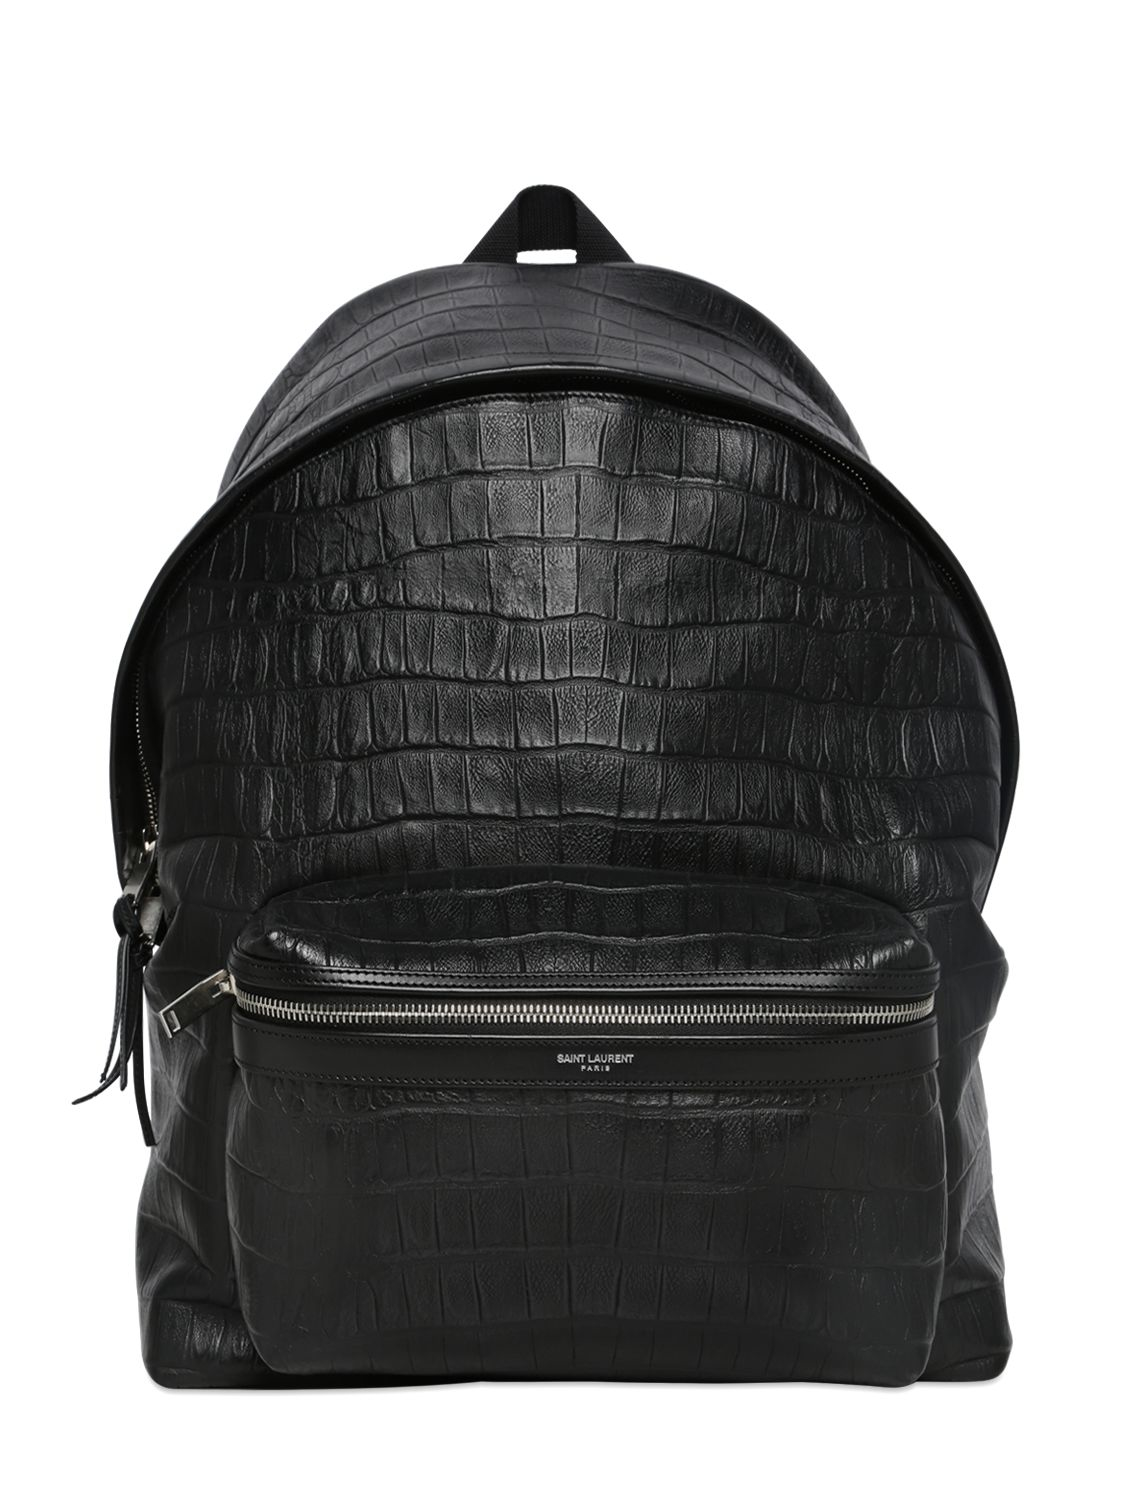 Saint Laurent Croc Embossed Leather Backpack in Black for Men - Lyst